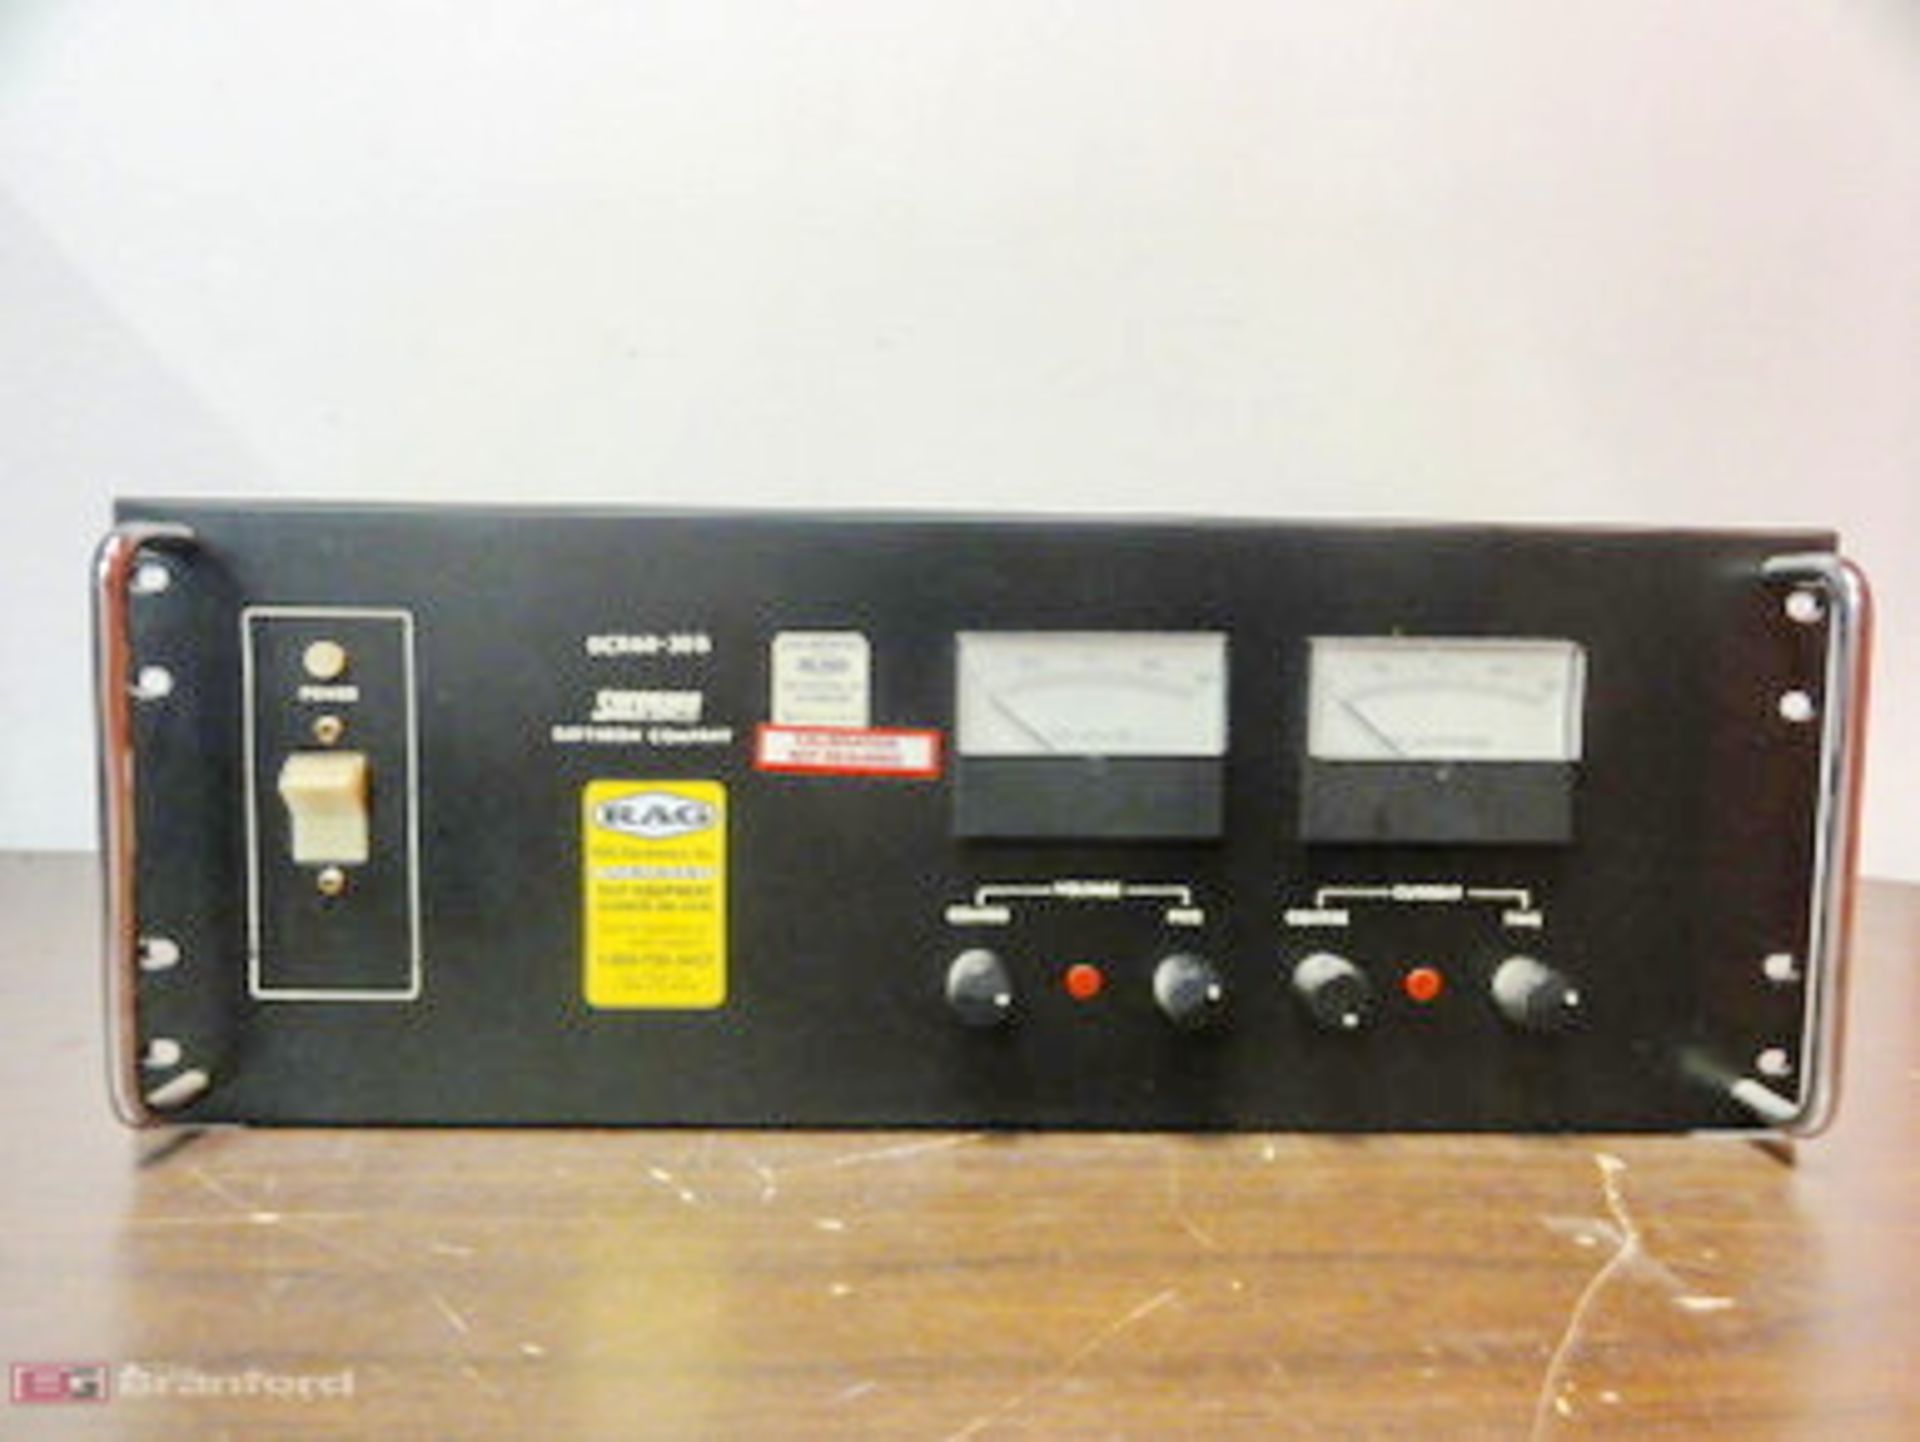 Sorensen DCR 60-30B dc power supply - Image 2 of 5